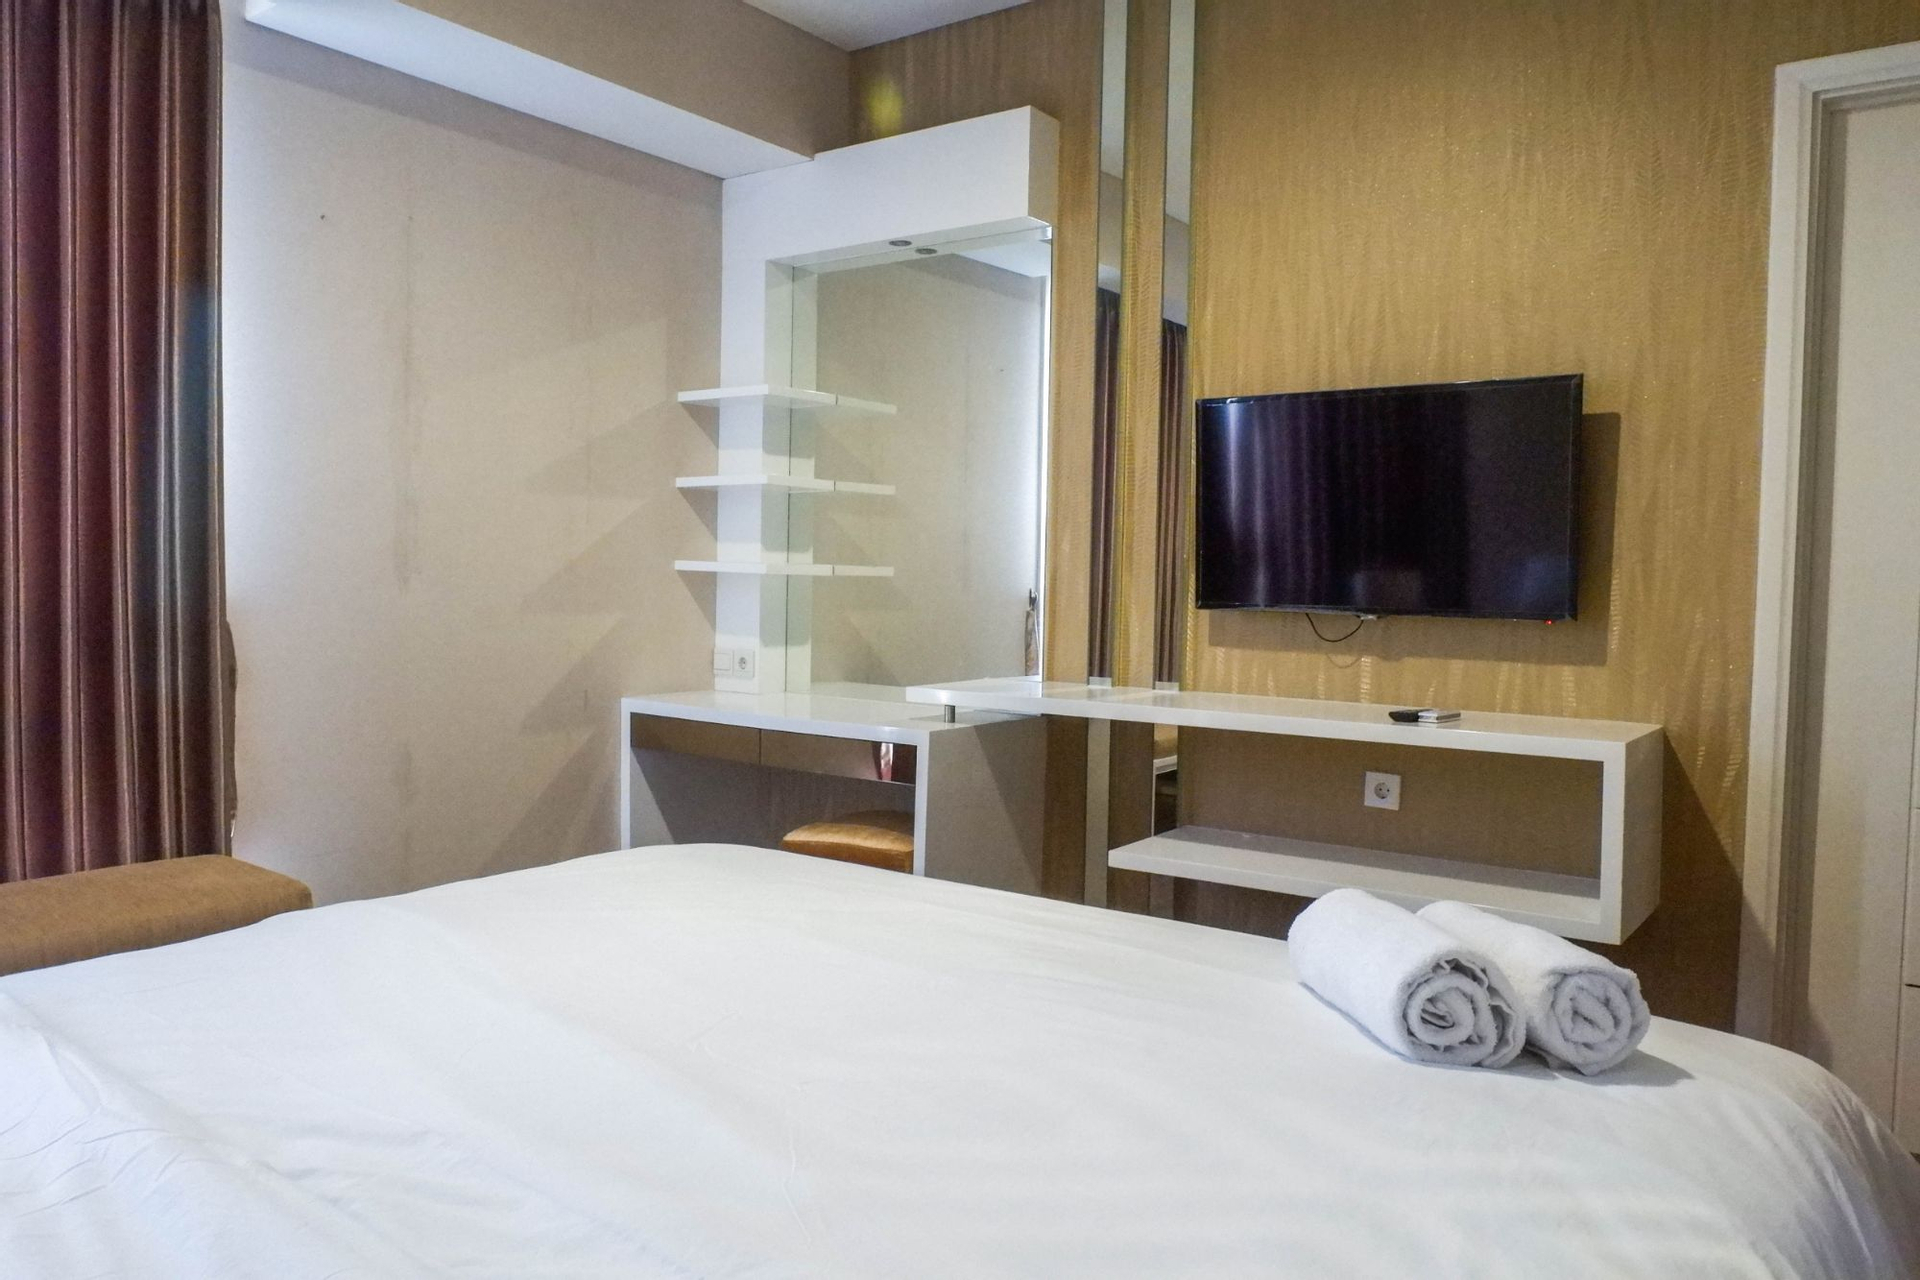 Bedroom 4, Strategic & Spacious 3BR Apartment at Trillium Residence By Travelio, Surabaya